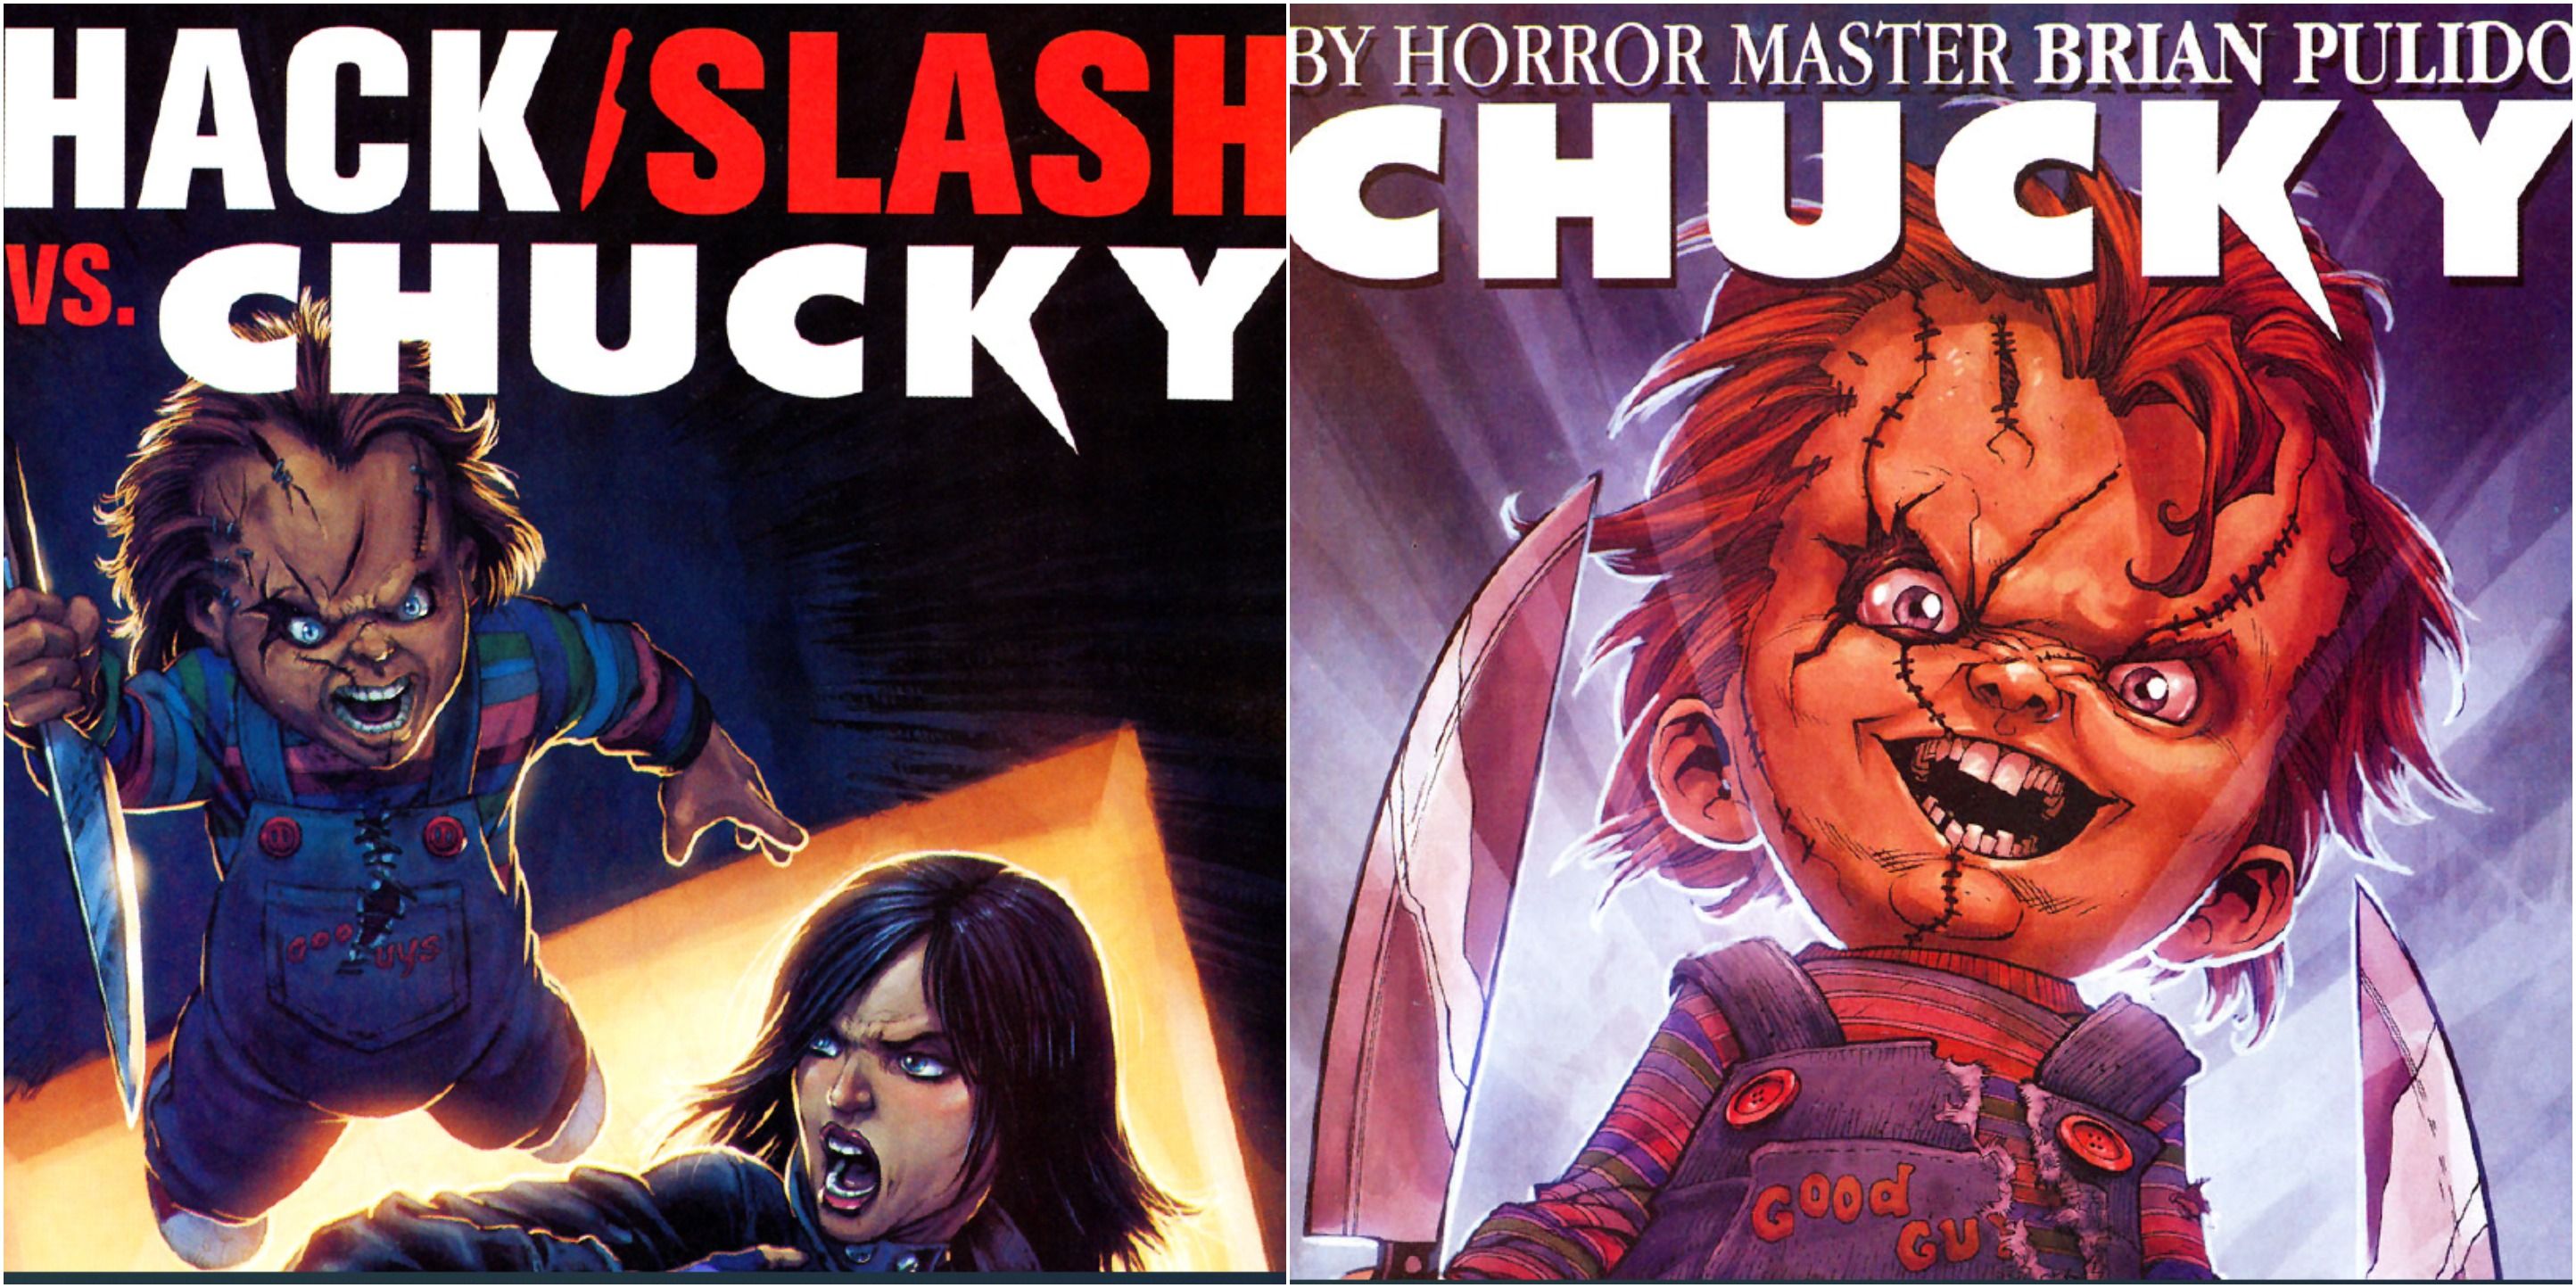 Hack/Slash VS Chucky cover images